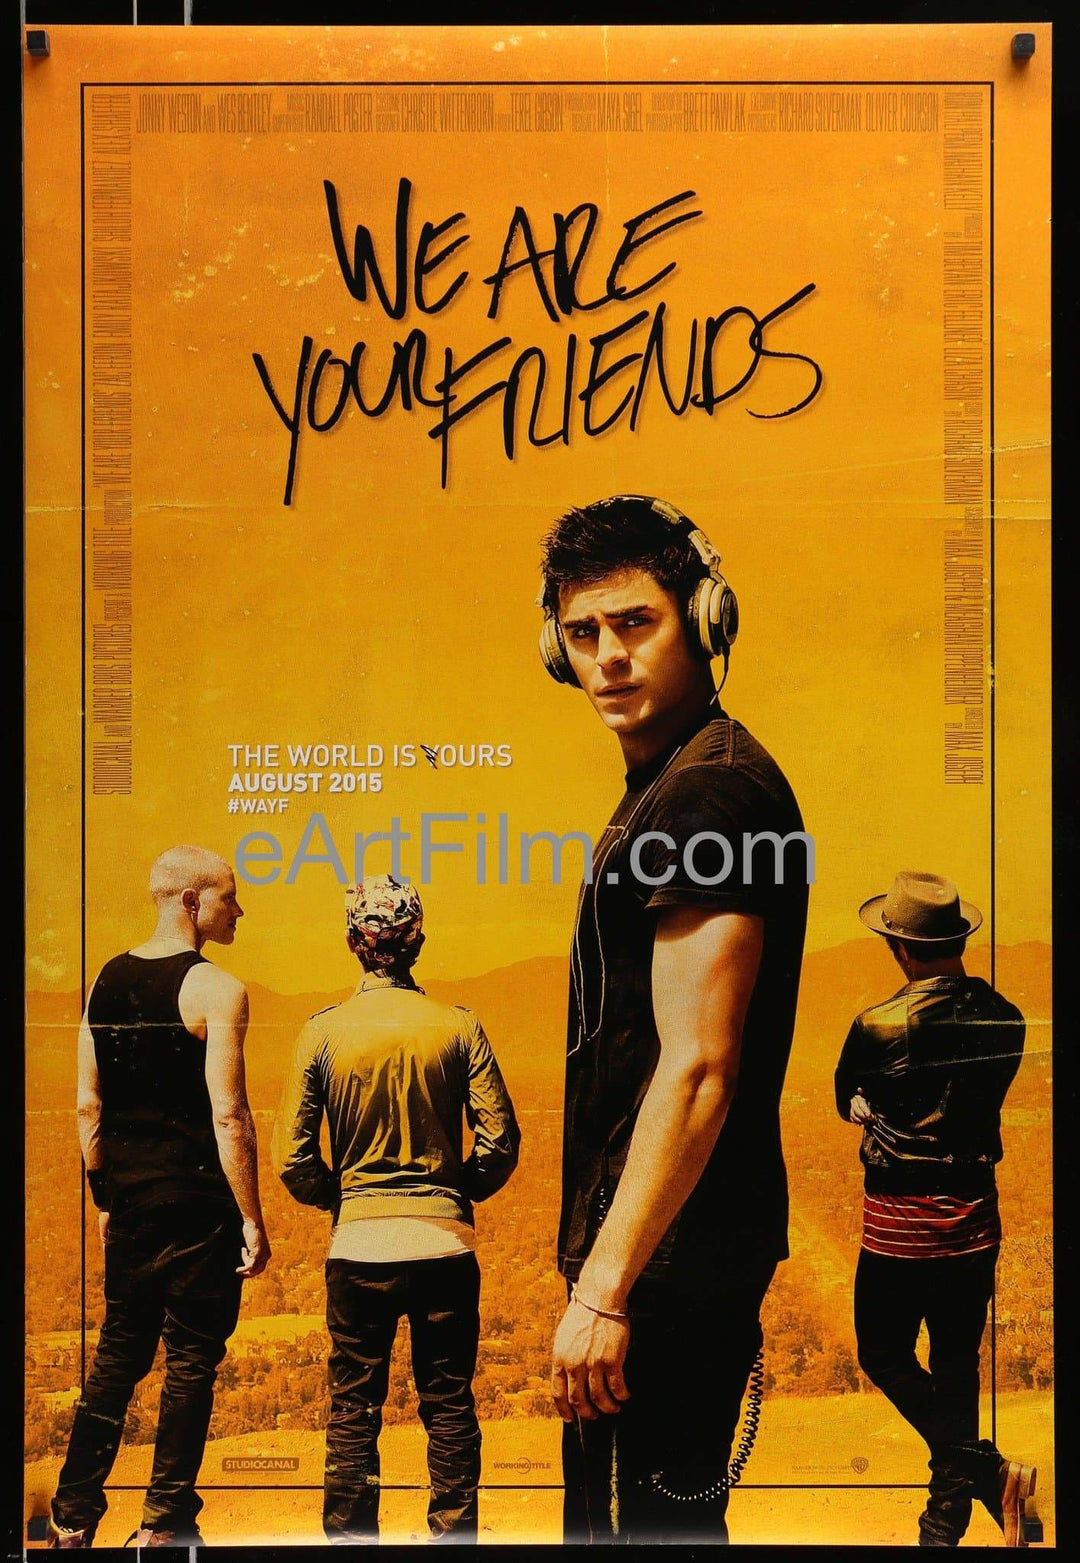 eArtFilm.com U.S Unfolded Advance Double Sided One Sheet (27"x40")-Original-Vintage-Movie-Poster We Are Your Friends 2015 27x40 Original U.S One Sheet Movie Poster